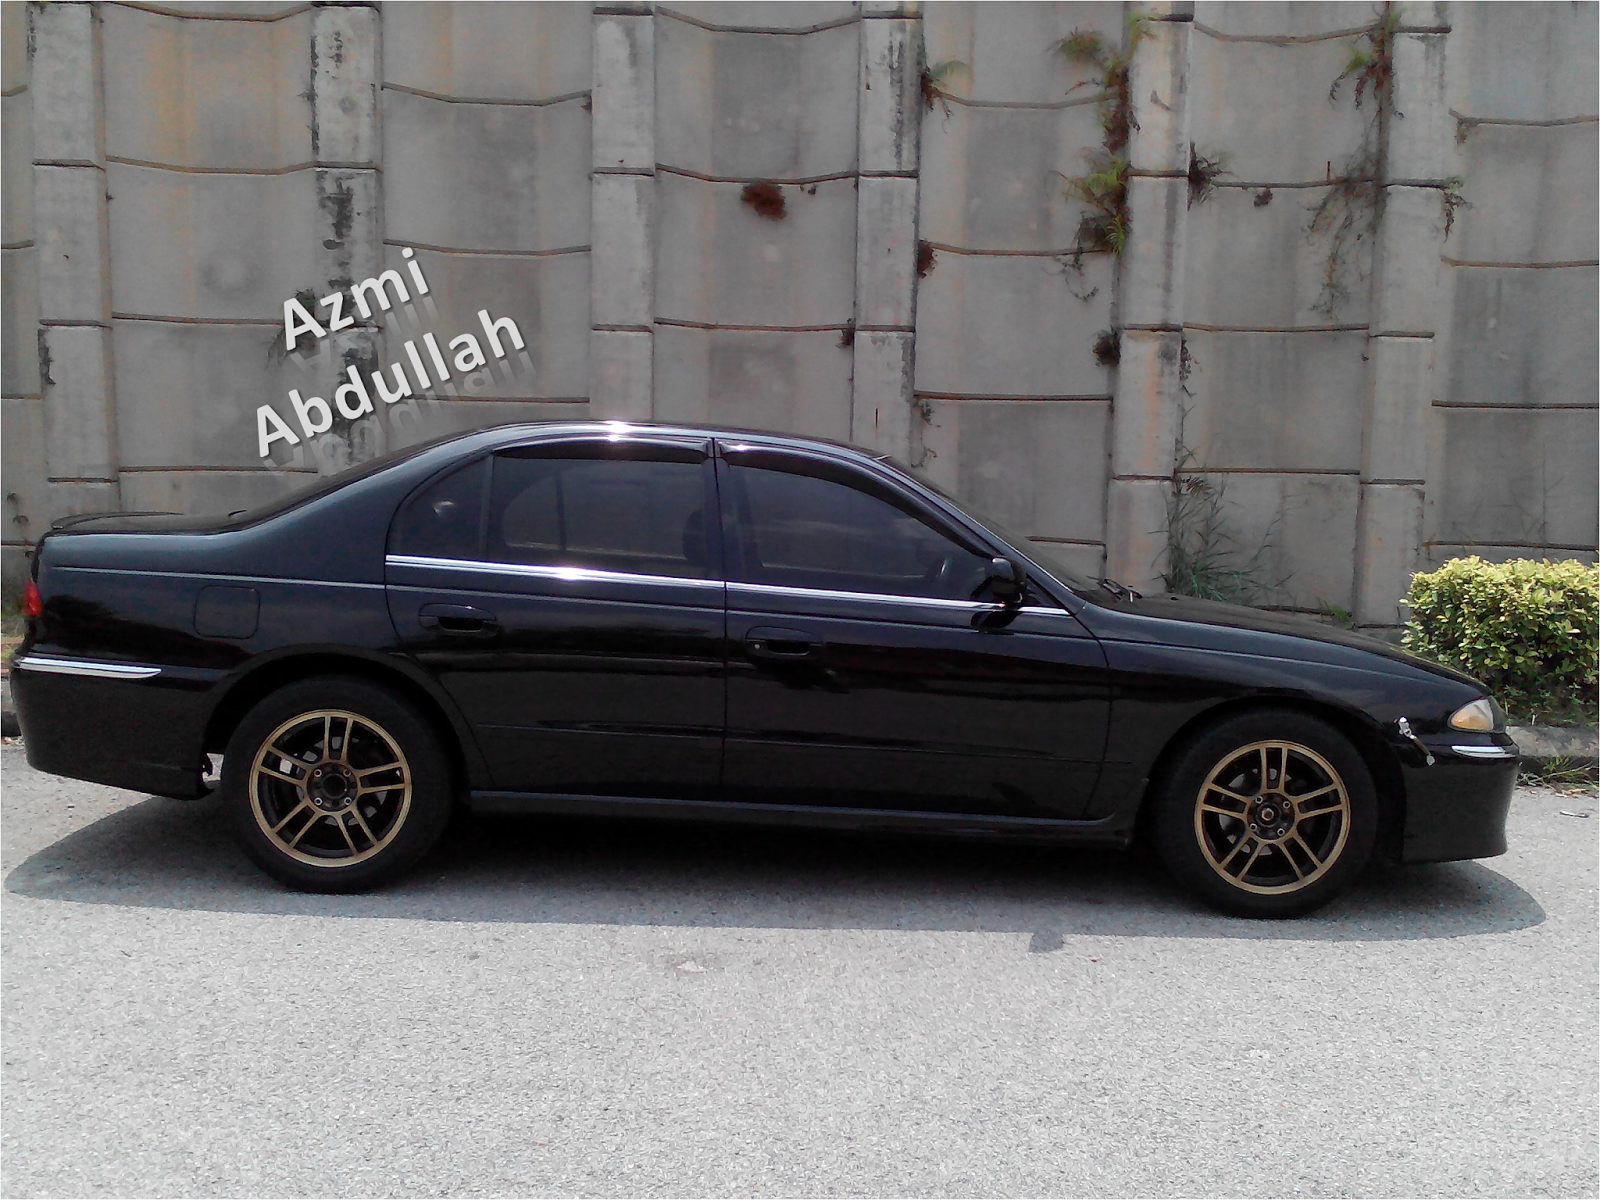 Azmi Abdullah - Blog Jualan kereta Terpakai: Proton ...